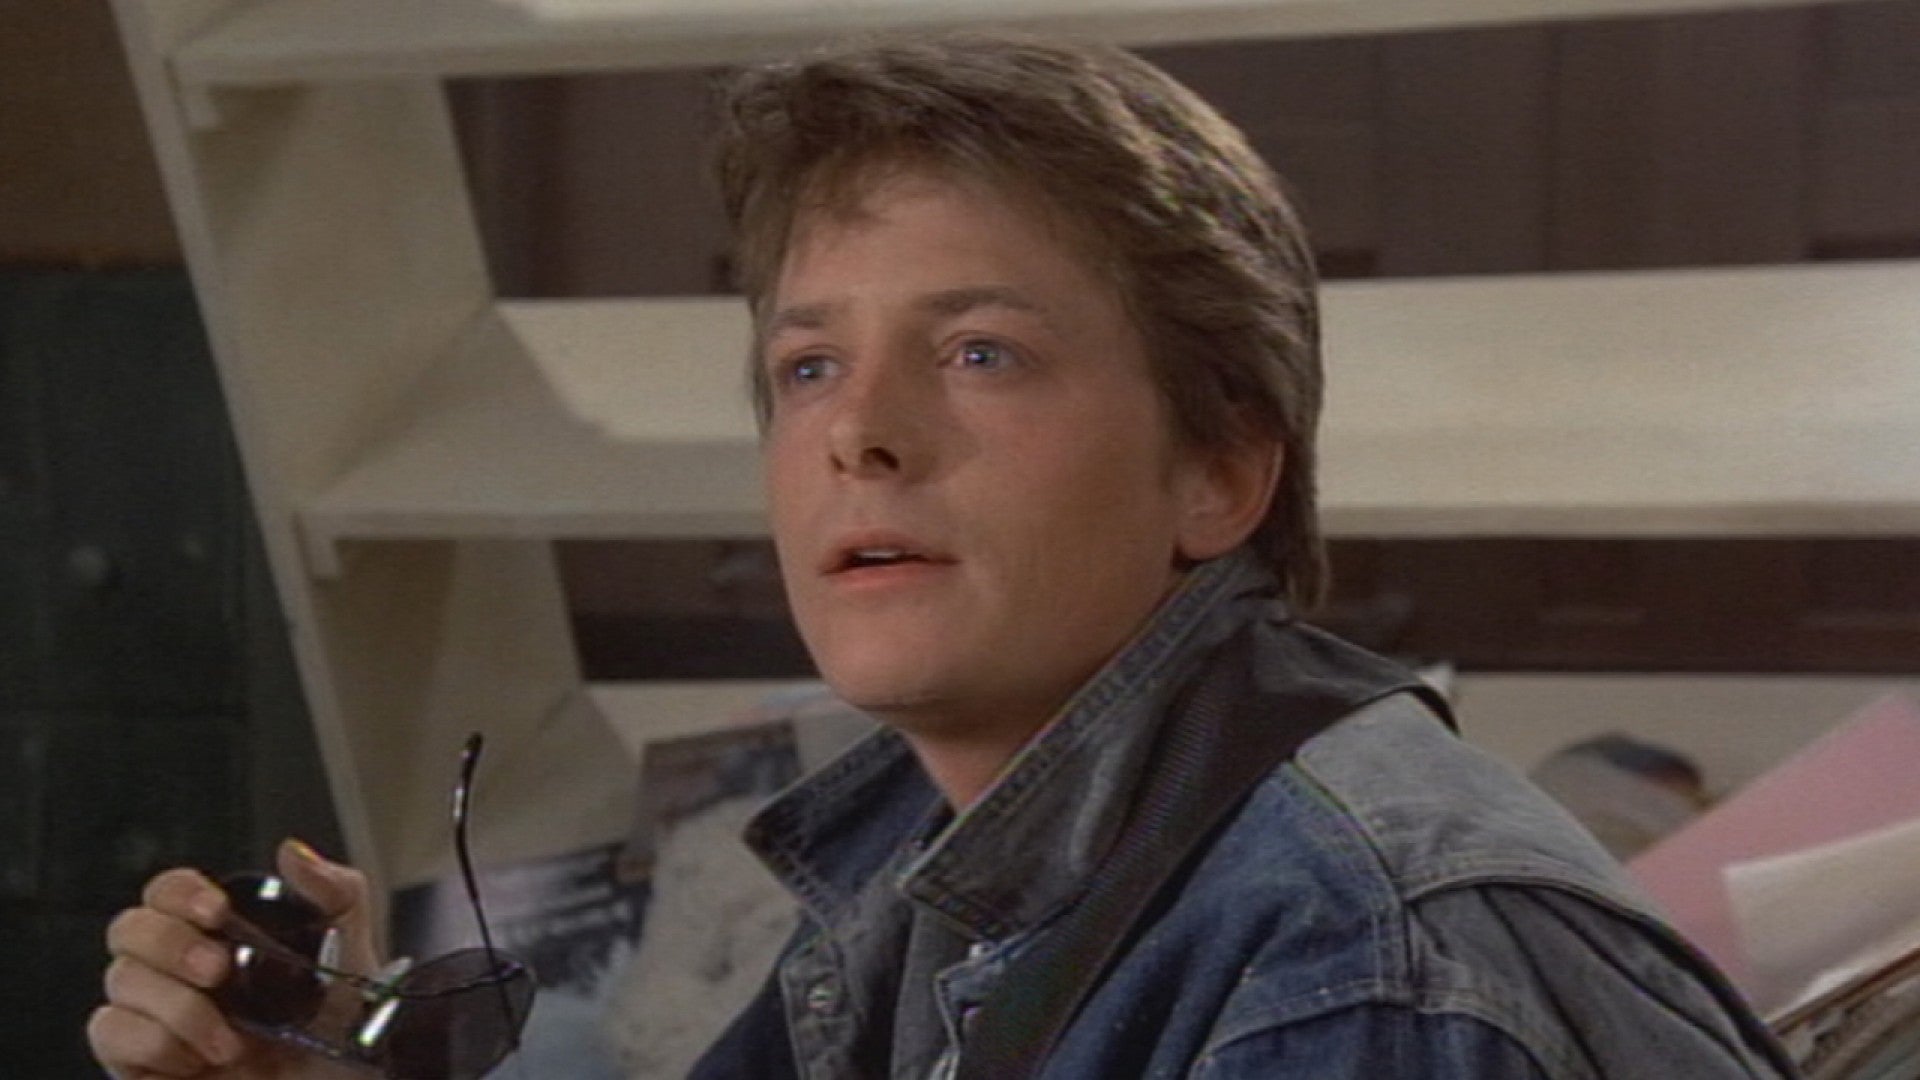 Michael J Fox as Marty McFly